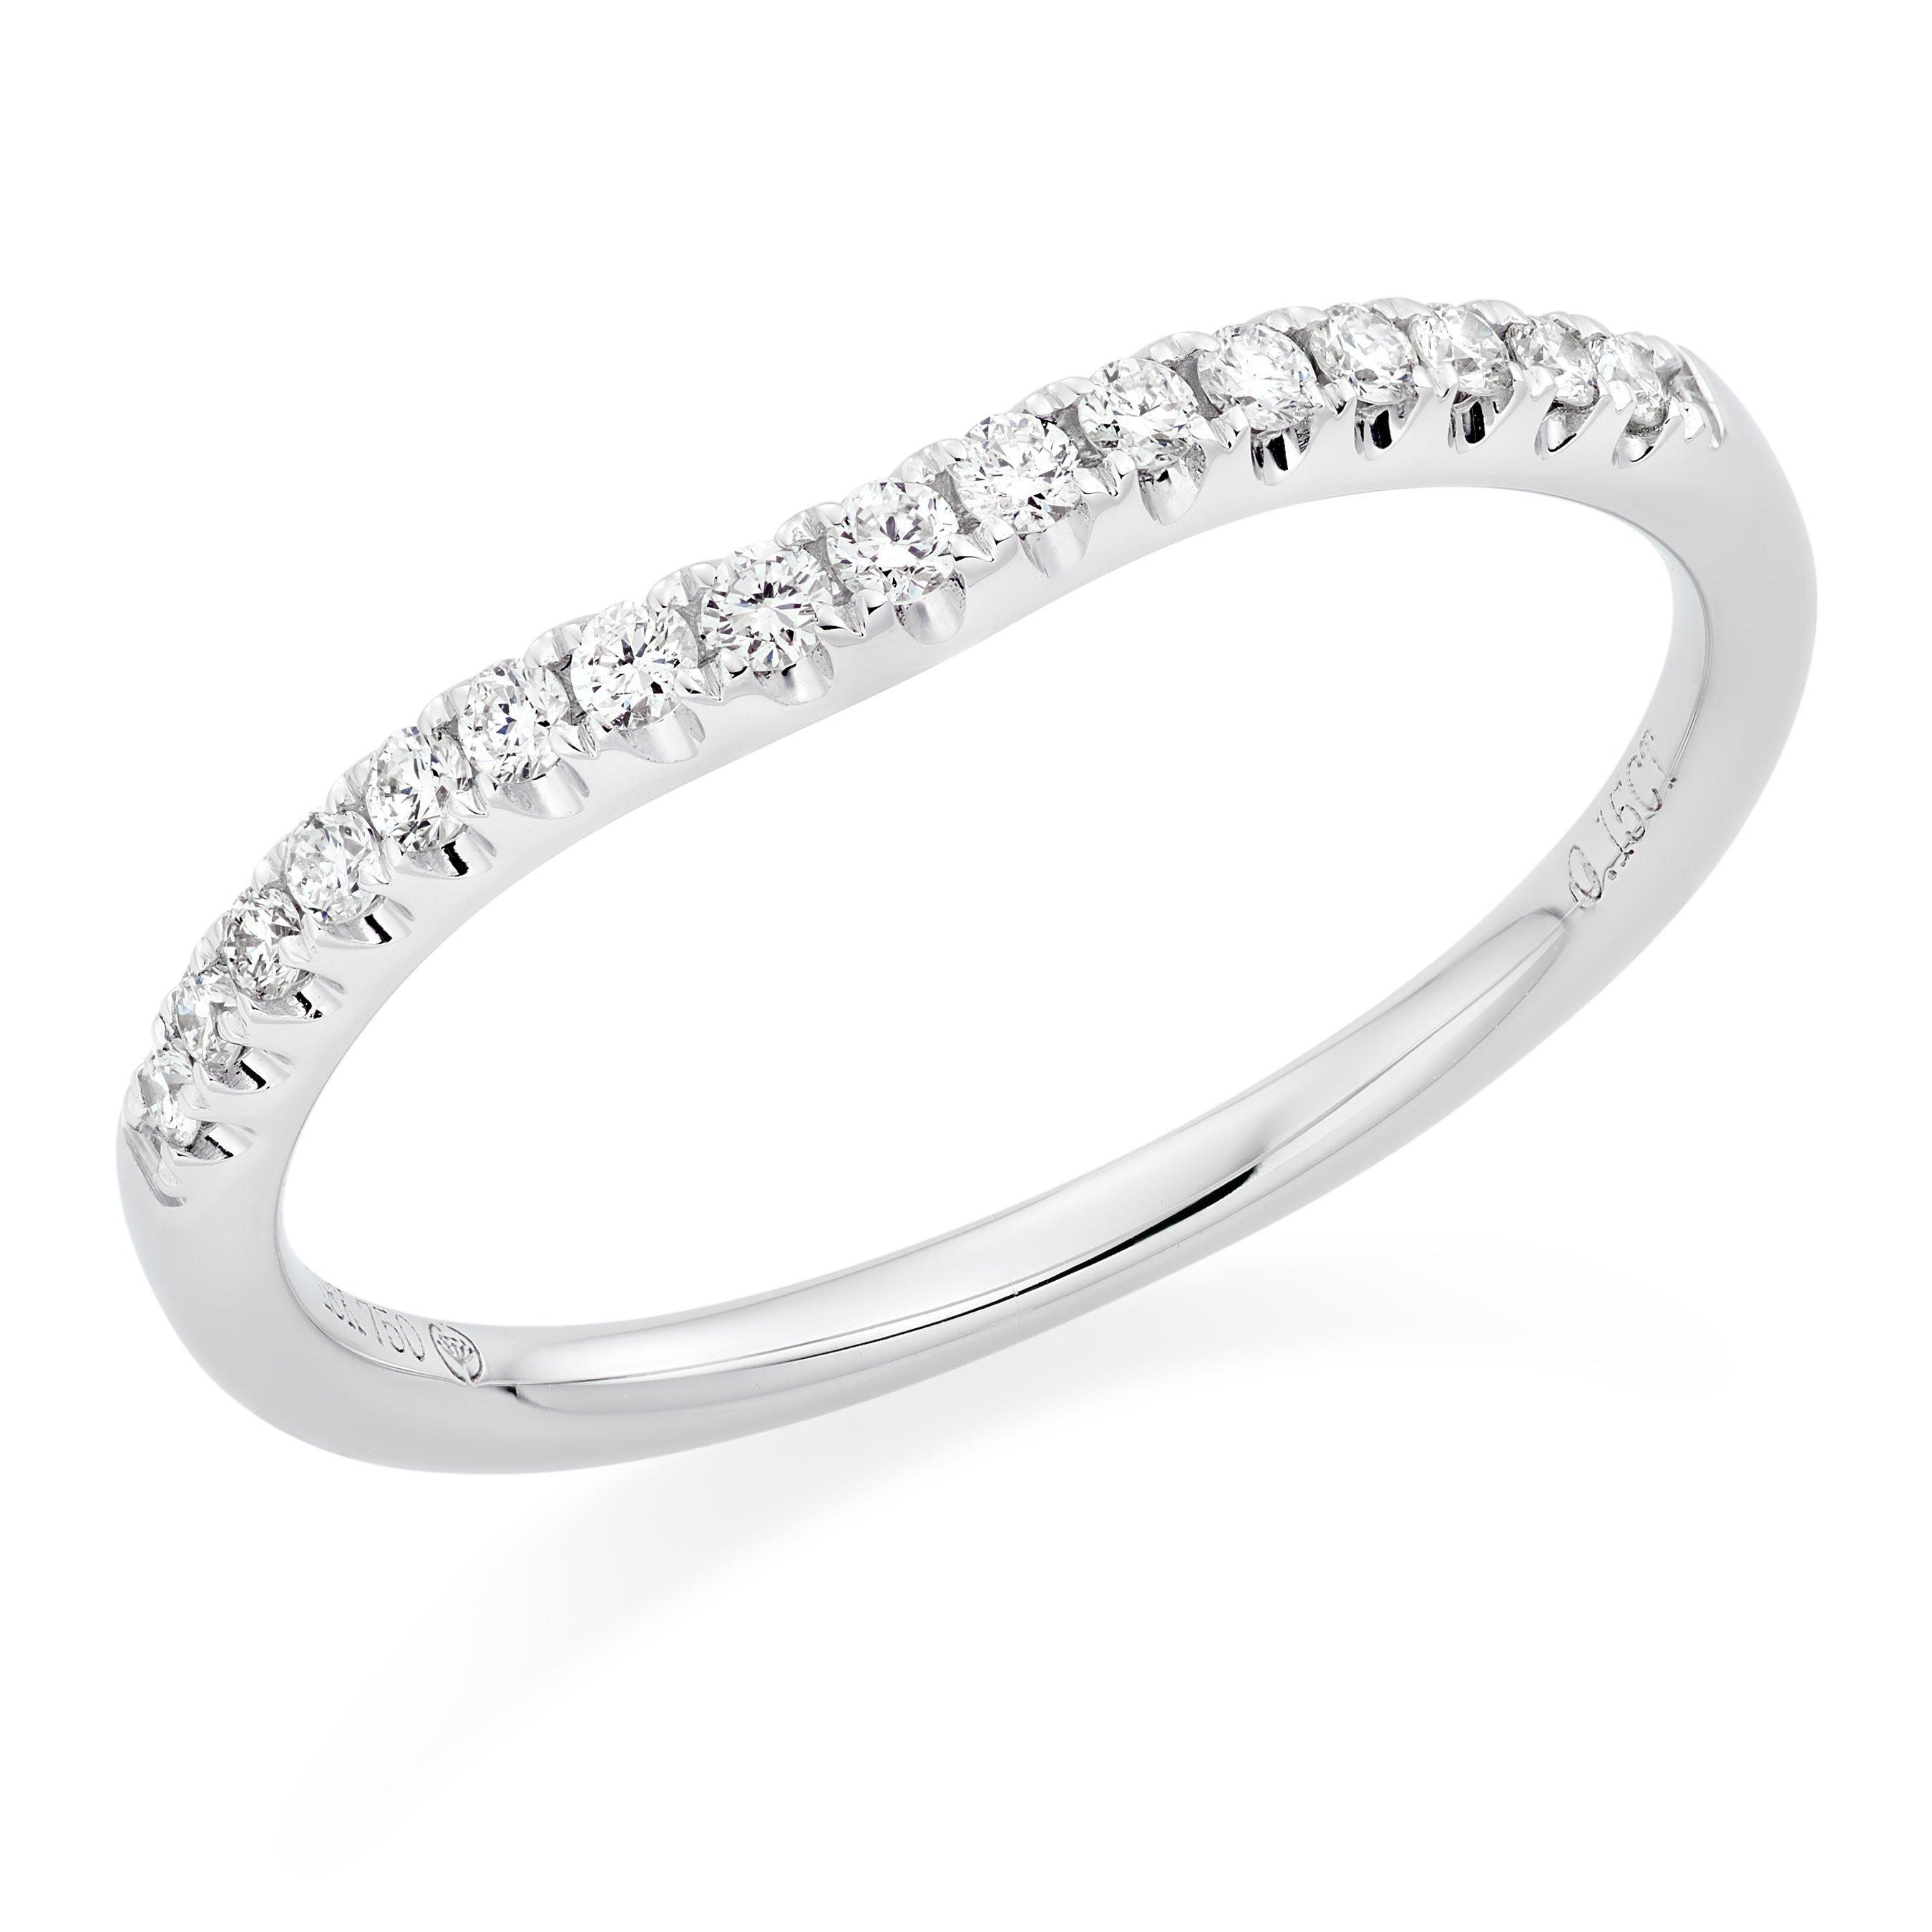 18ct White Gold Diamond Shaped Wedding Ring | 0127475 | Beaverbrooks ...